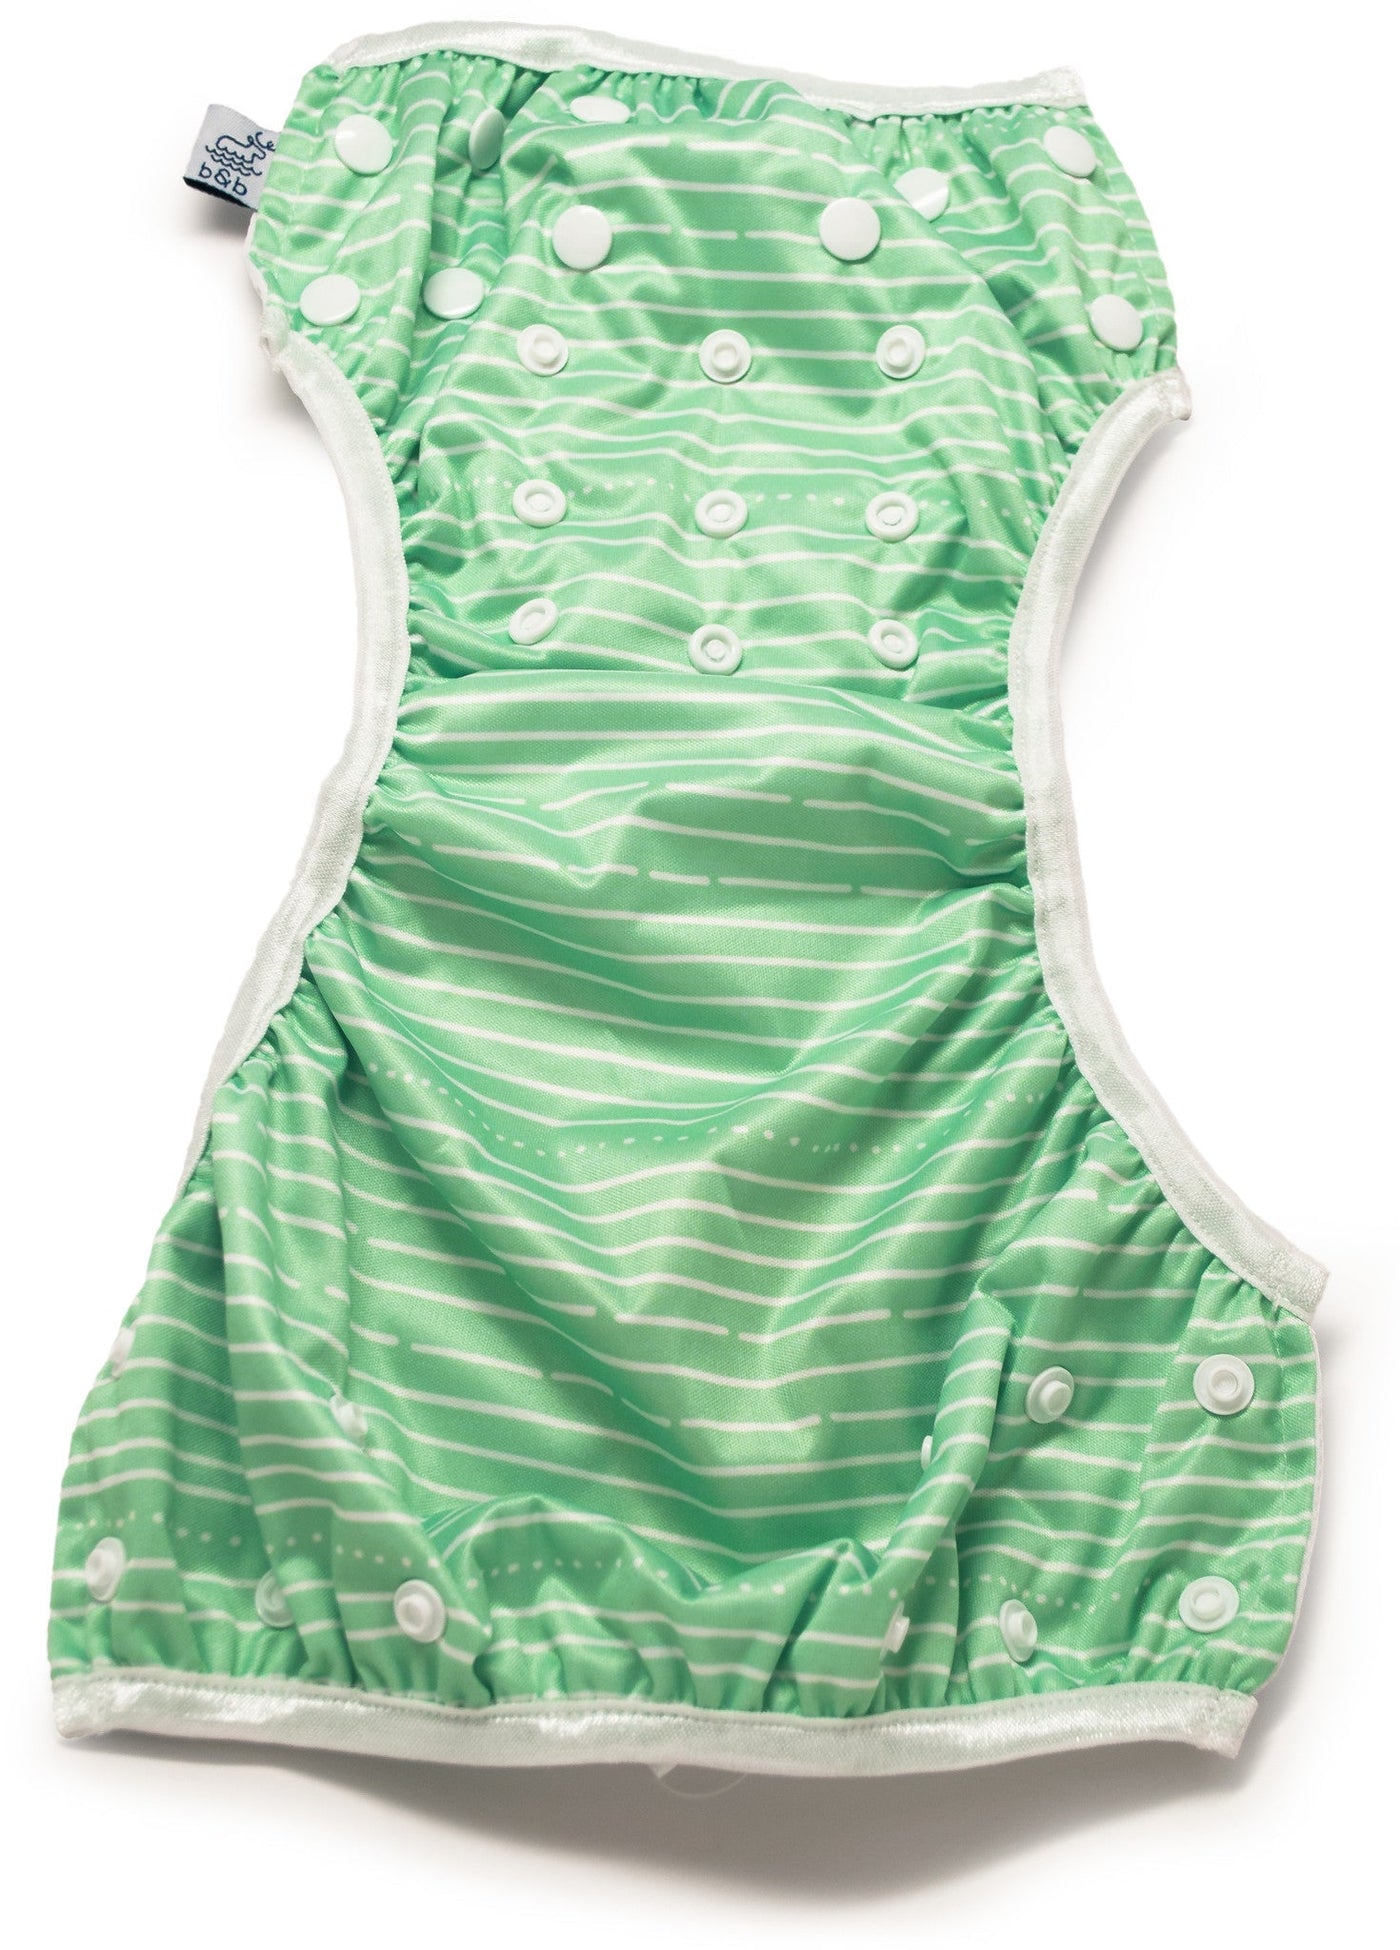 Green Stripes Cloth Reusable Swim Diaper